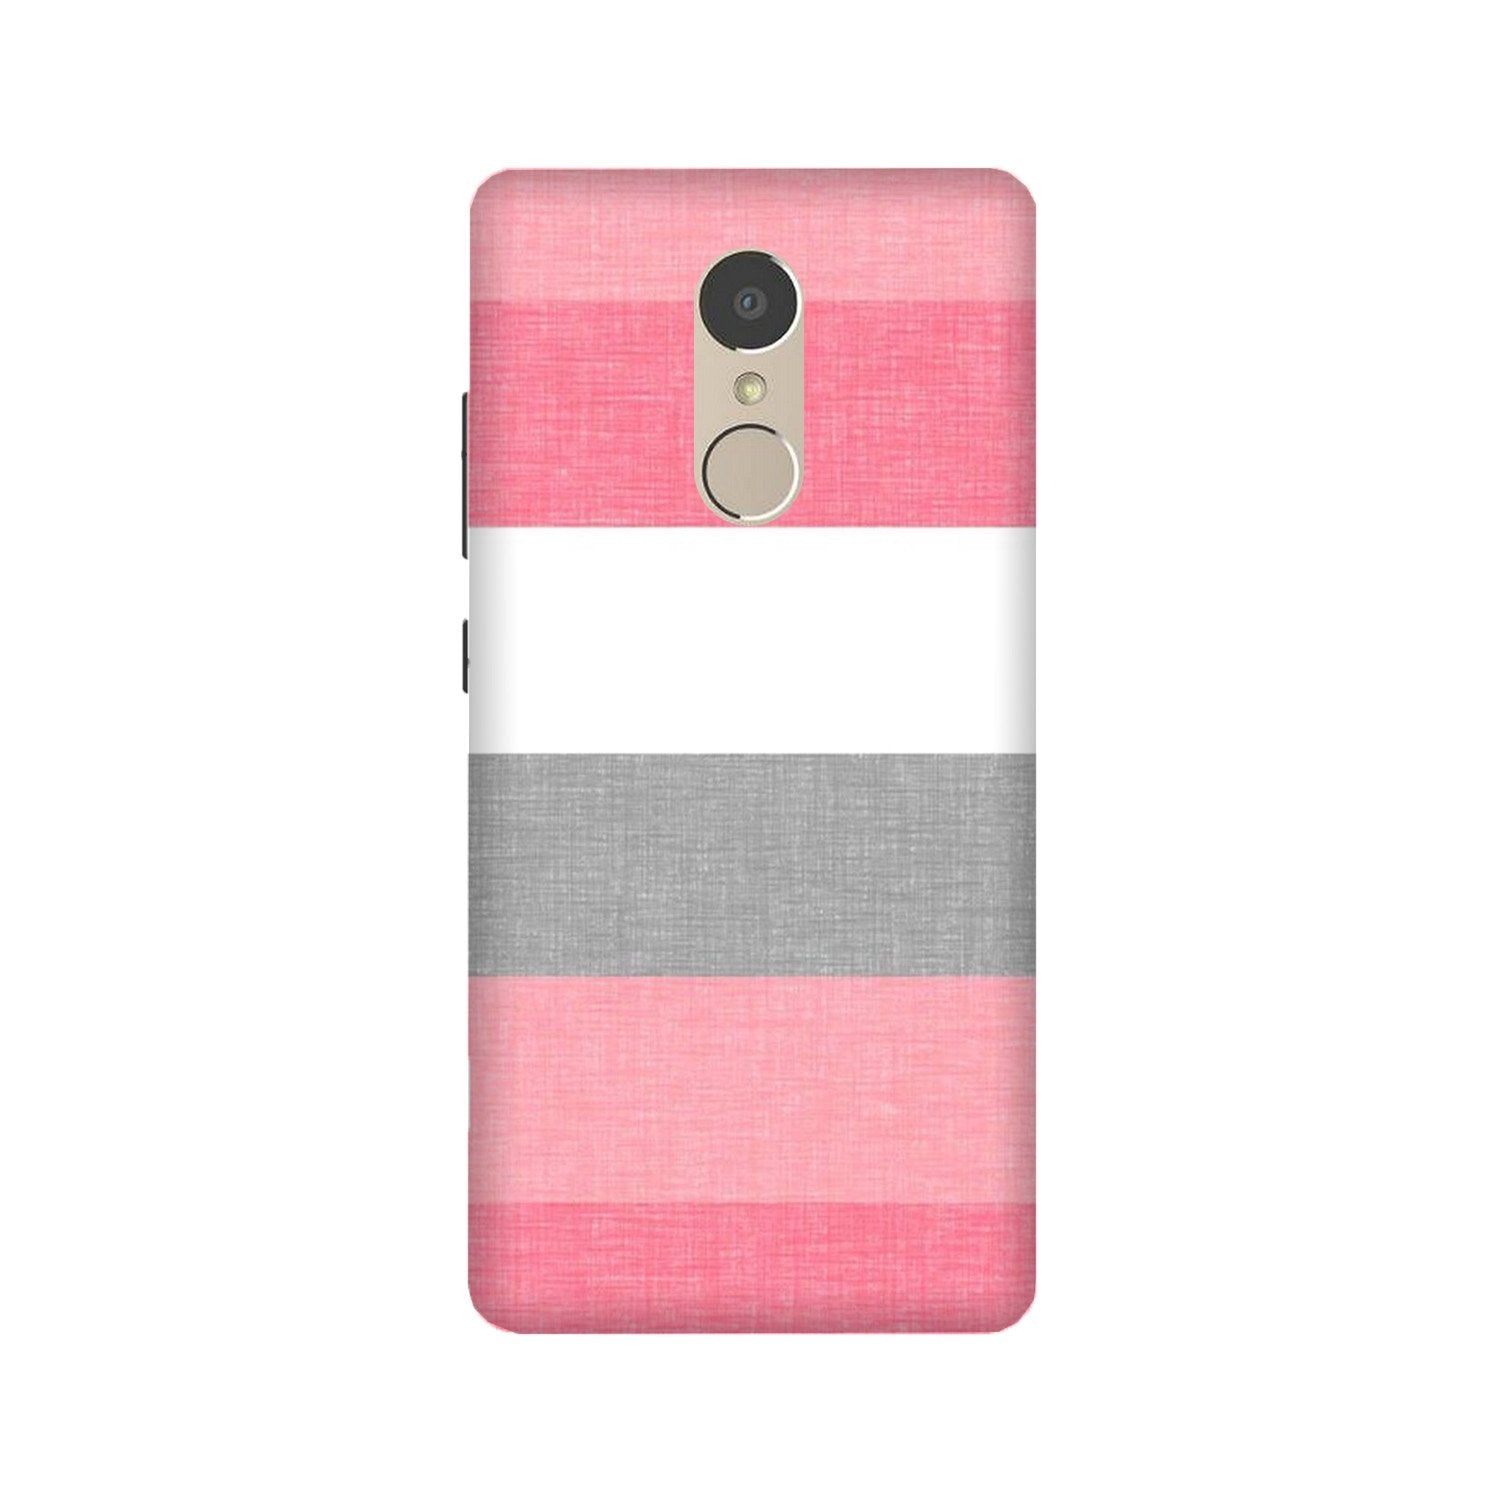 Pink white pattern Case for Lenovo K6 Note